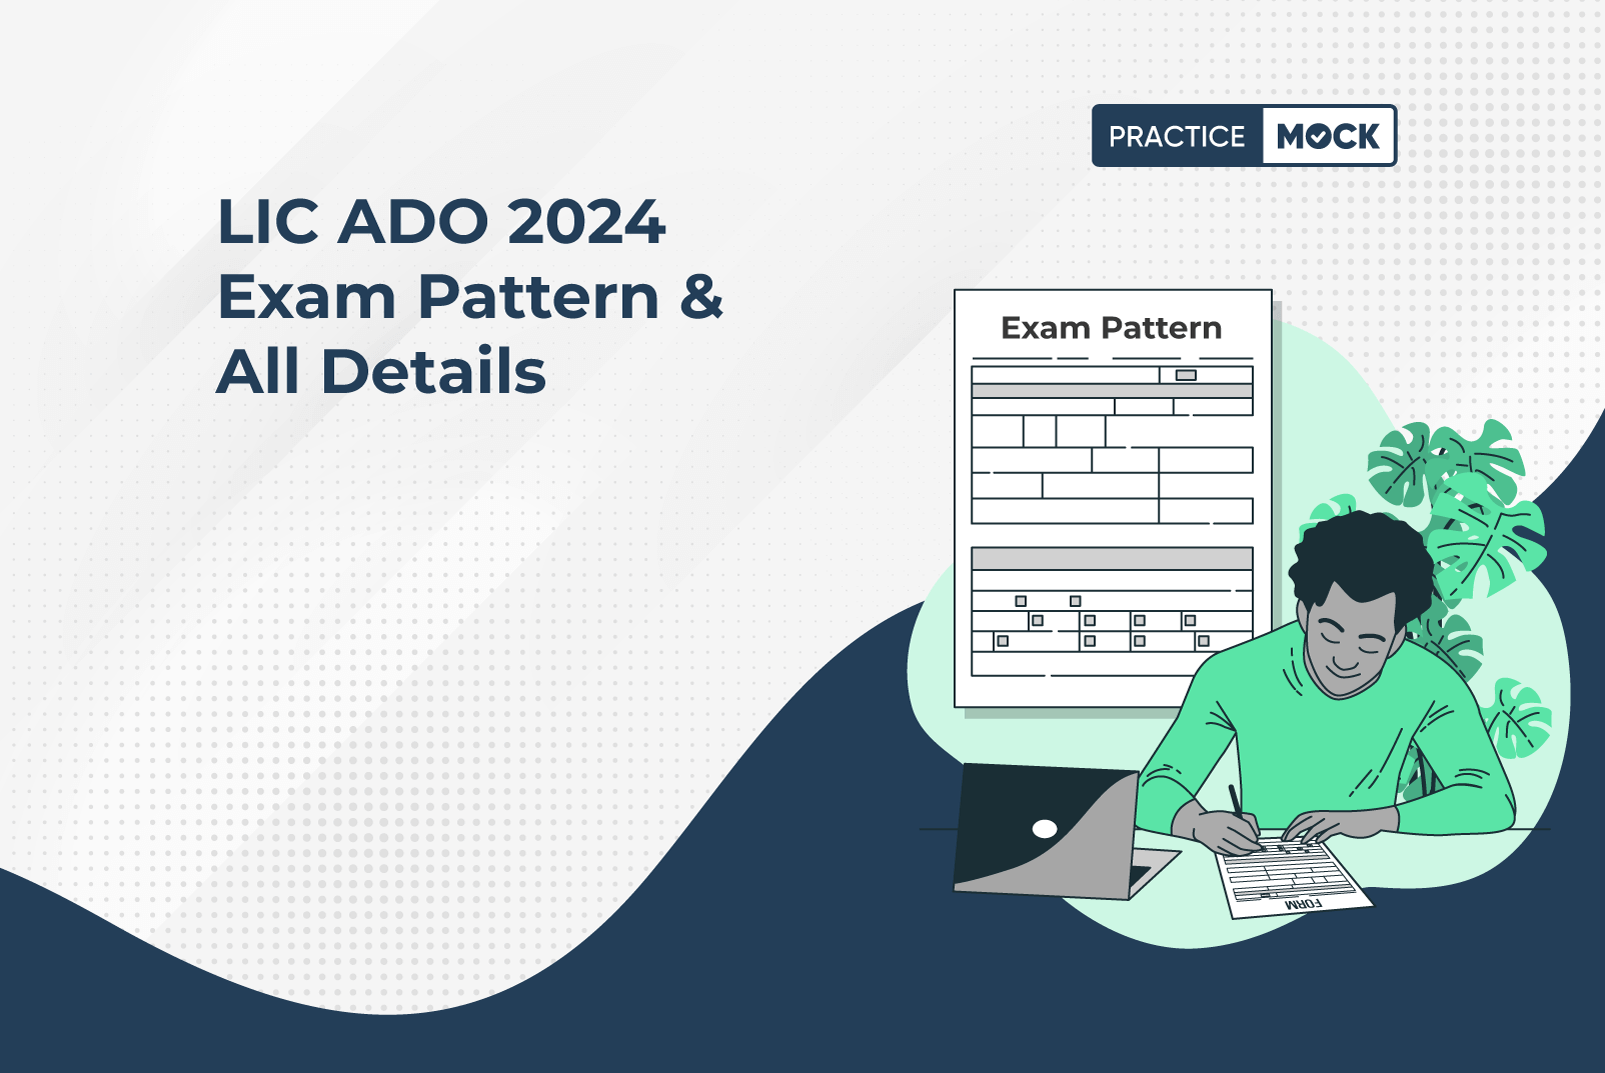 LIC ADO 2024 Detailed Exam Pattern